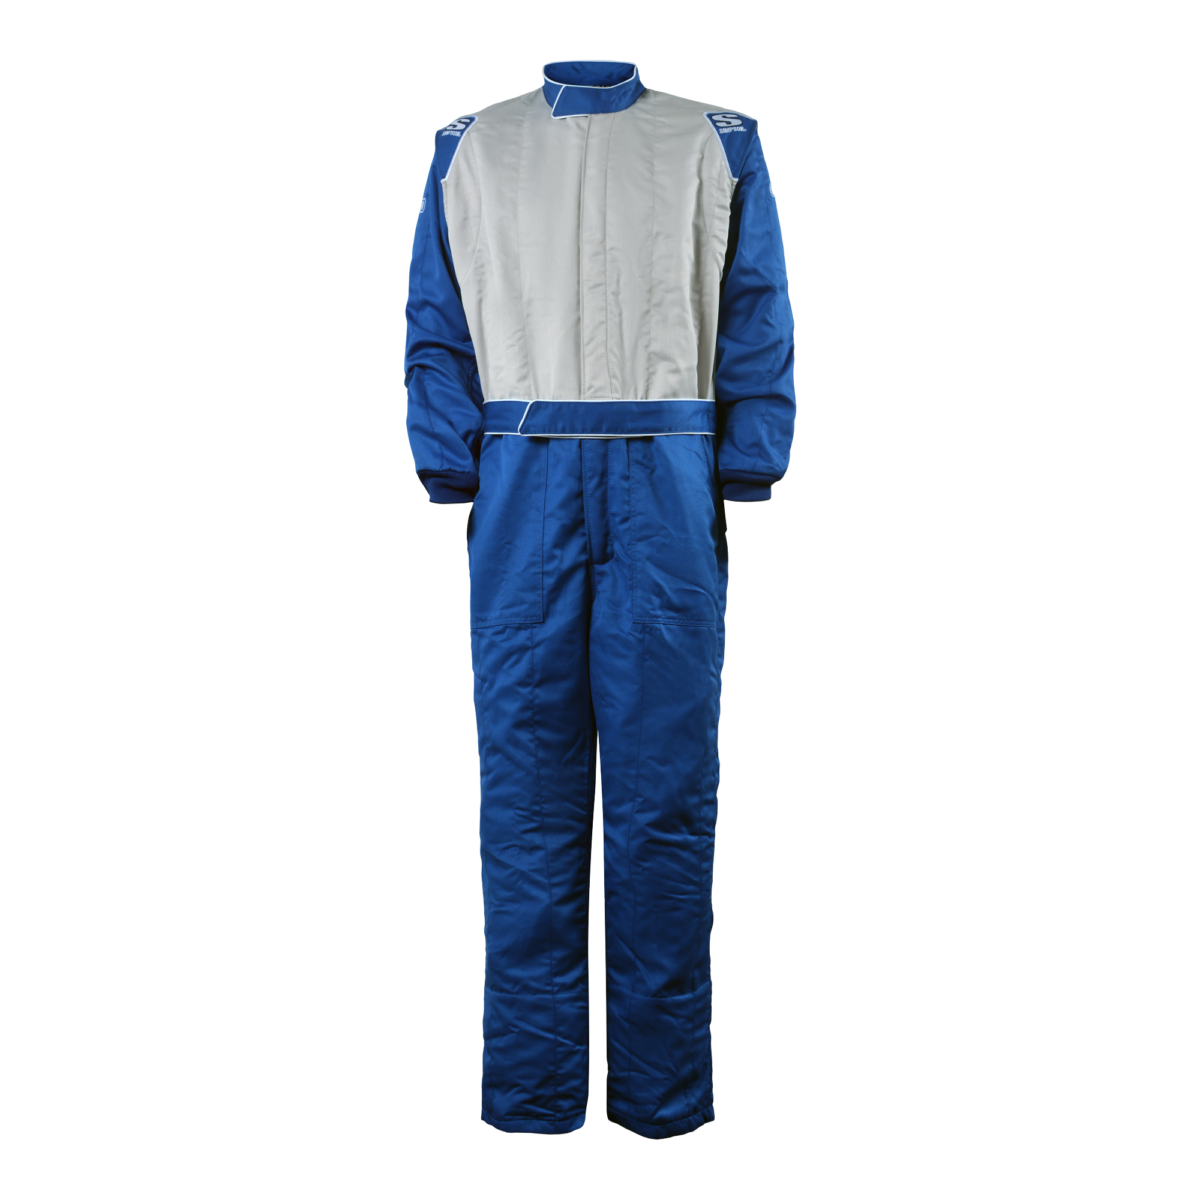 Simpson Sportsman Elite III Racing Suit - JOES Racing Products